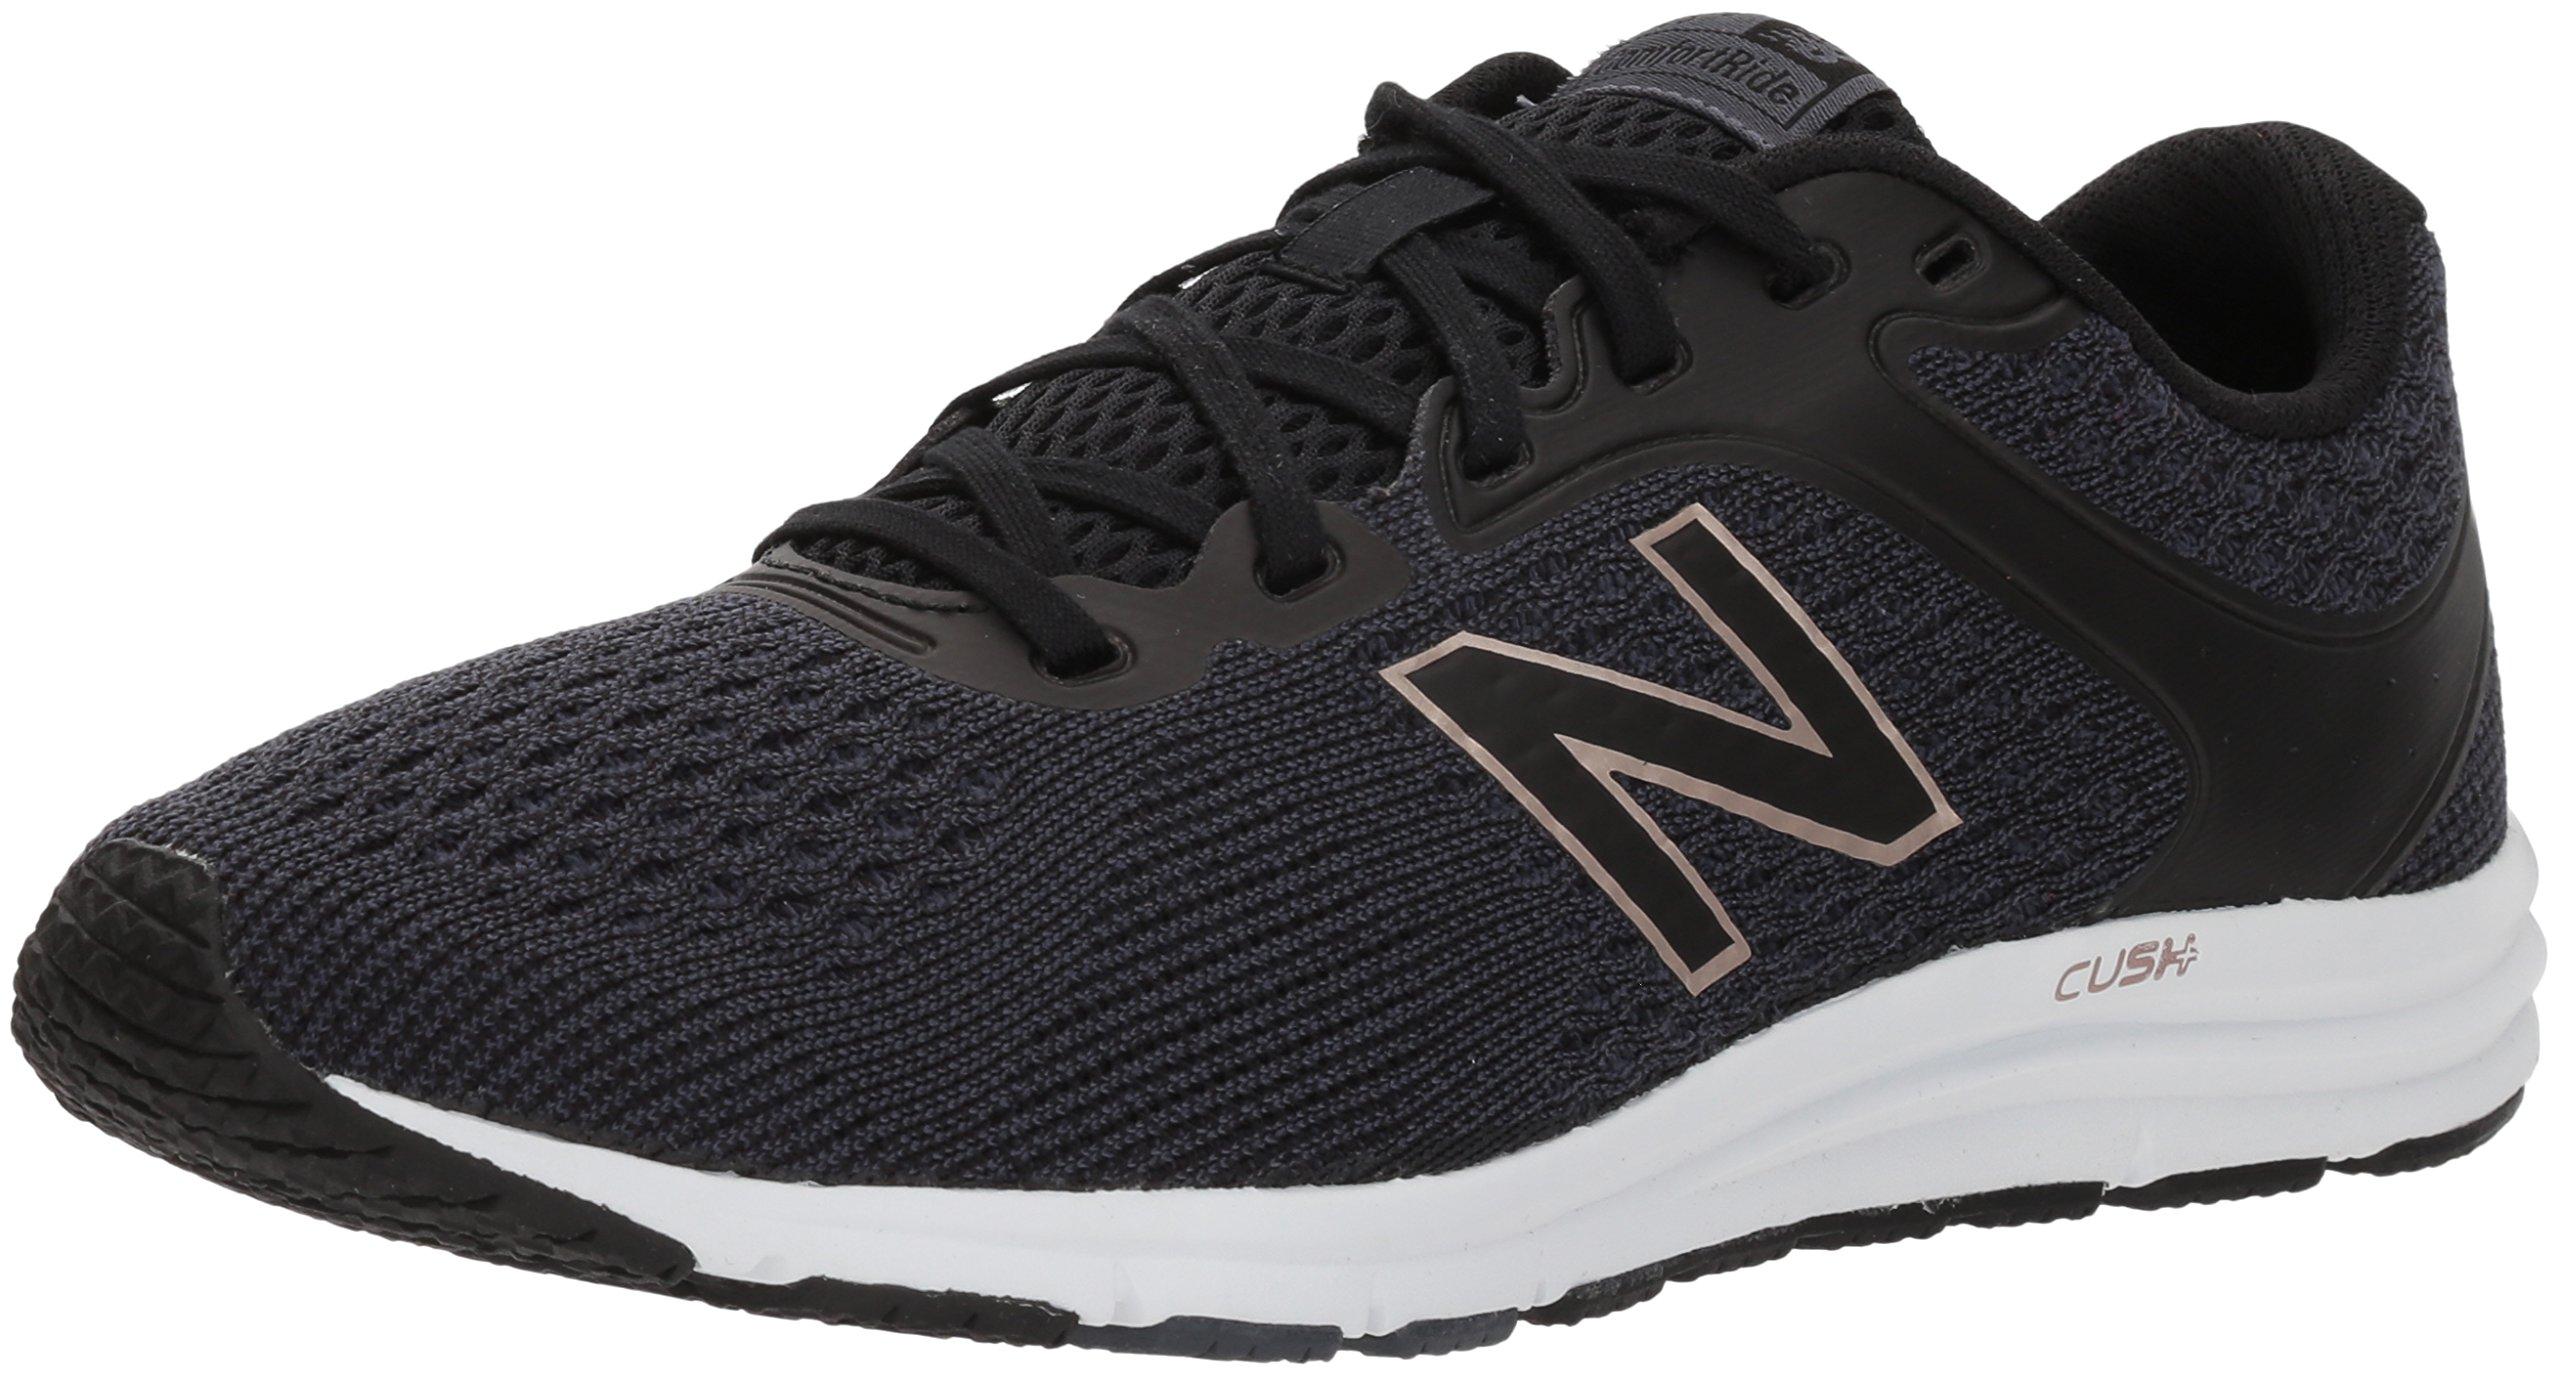 New Balance 635 V2 Running Shoe in Grey/Black (Black) - Save 3% - Lyst